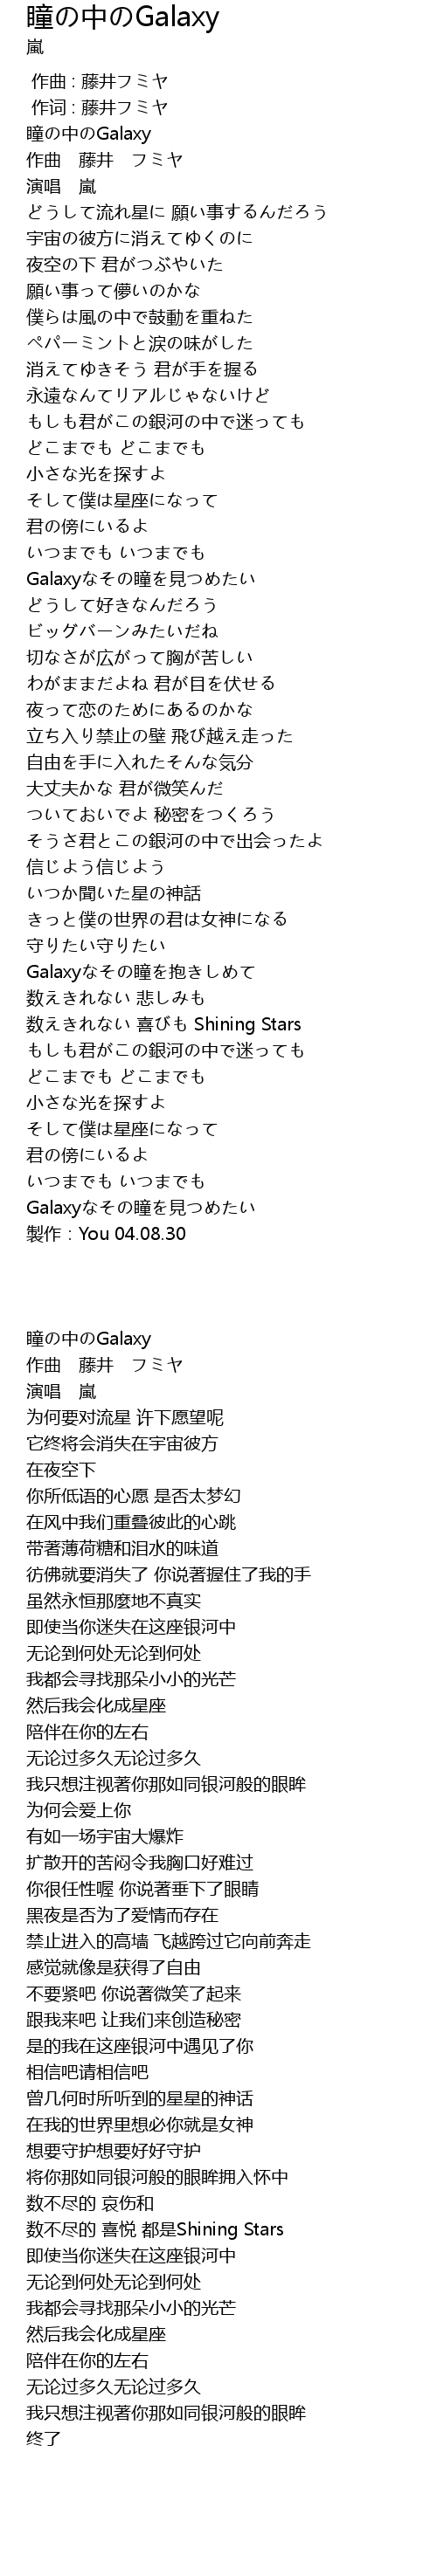 瞳の中のgalaxy Tong Zhong Galaxy Lyrics Follow Lyrics